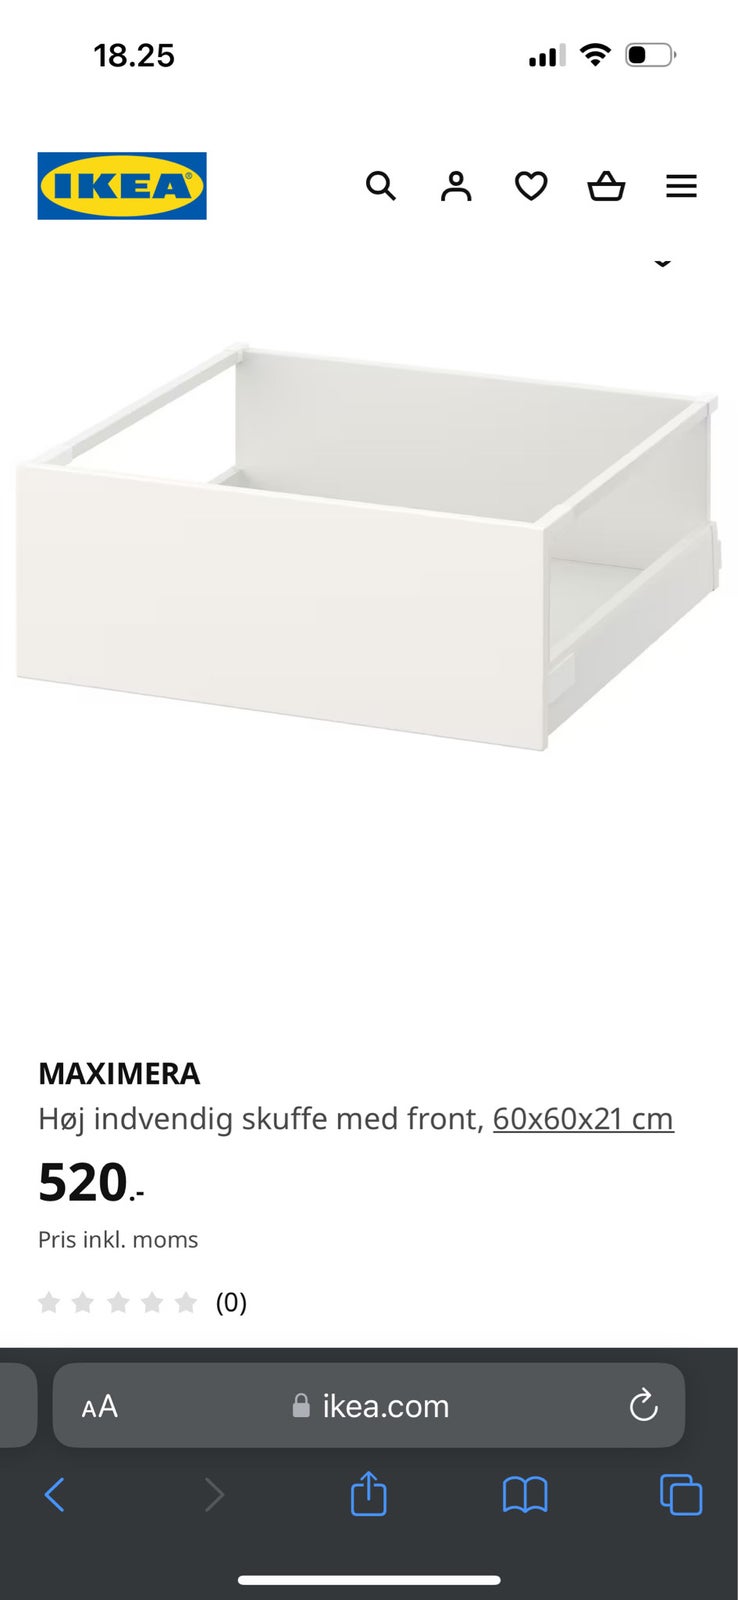 Andet, Ikea